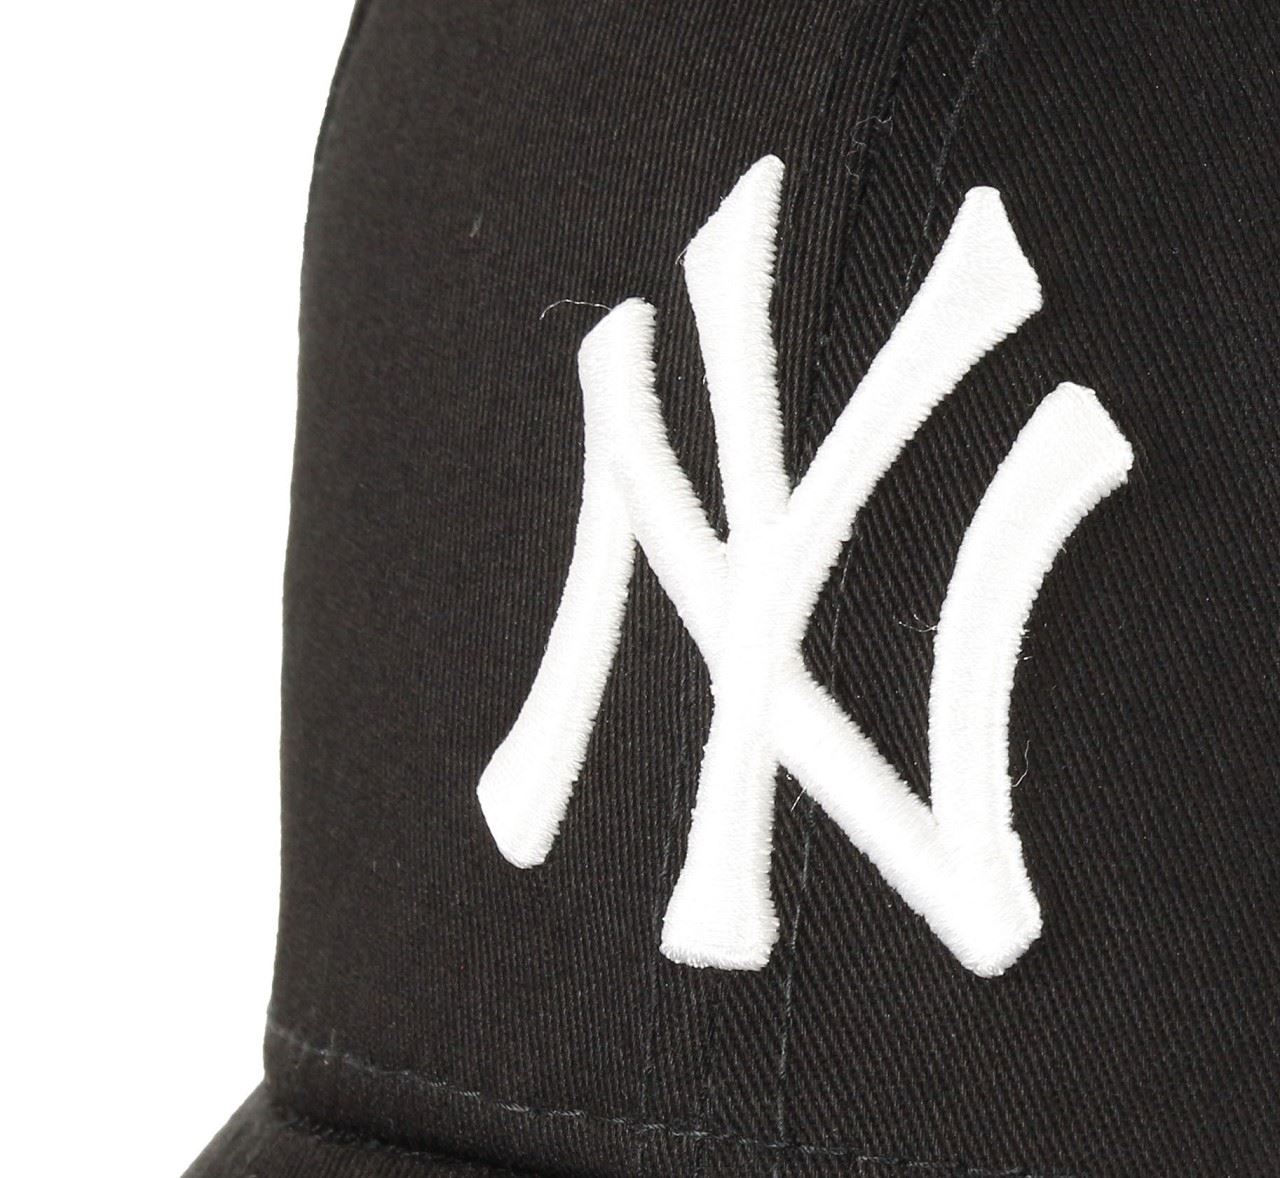 New York Yankees MLB Rear Logo Black / White 9Forty Adjustable Cap New Era